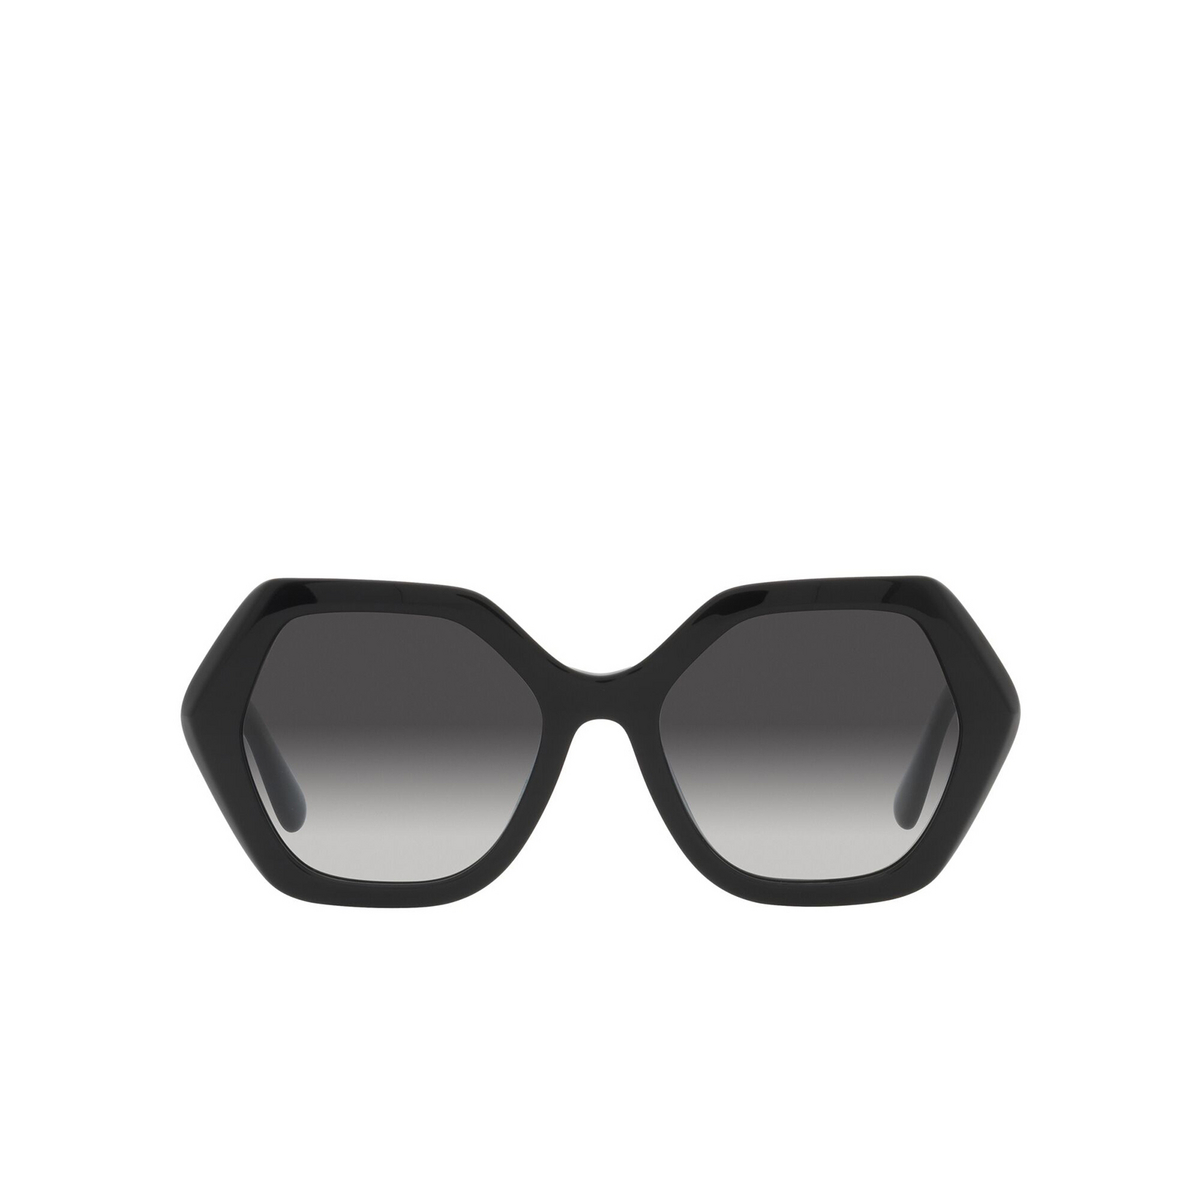 Dolce & Gabbana® Irregular Sunglasses: DG4406 color Black 501/8G - front view.